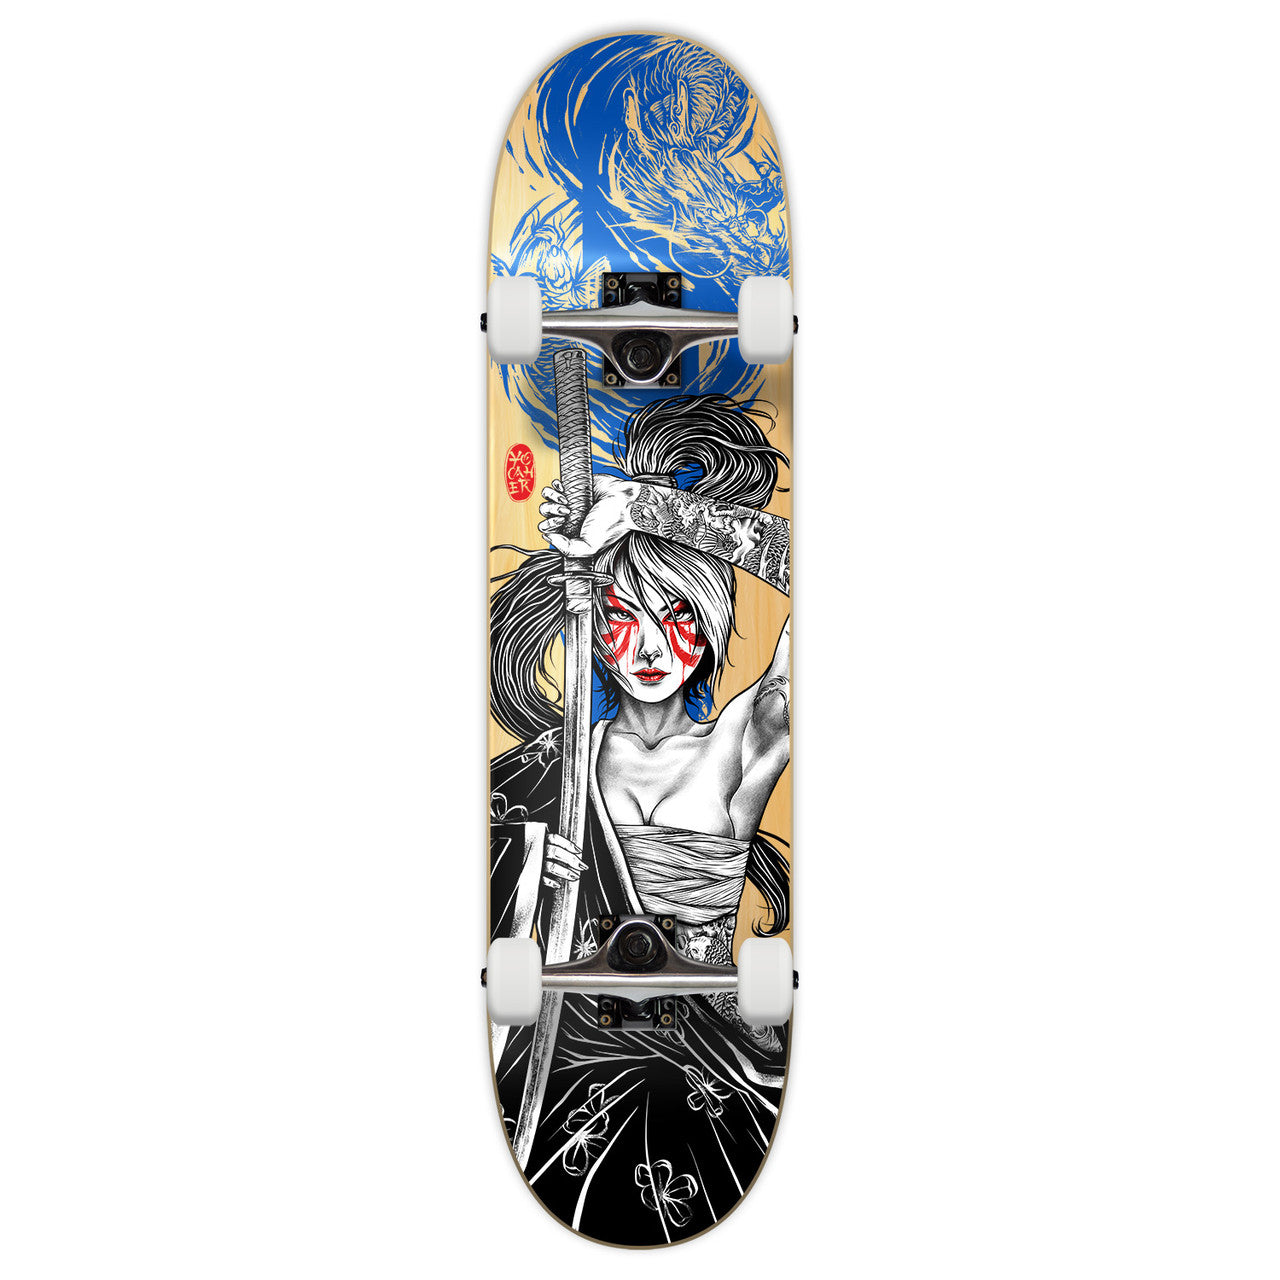 Yocaher Complete Skateboard 7.75" - Samurai Series - Girl Samurai Blue Dragon